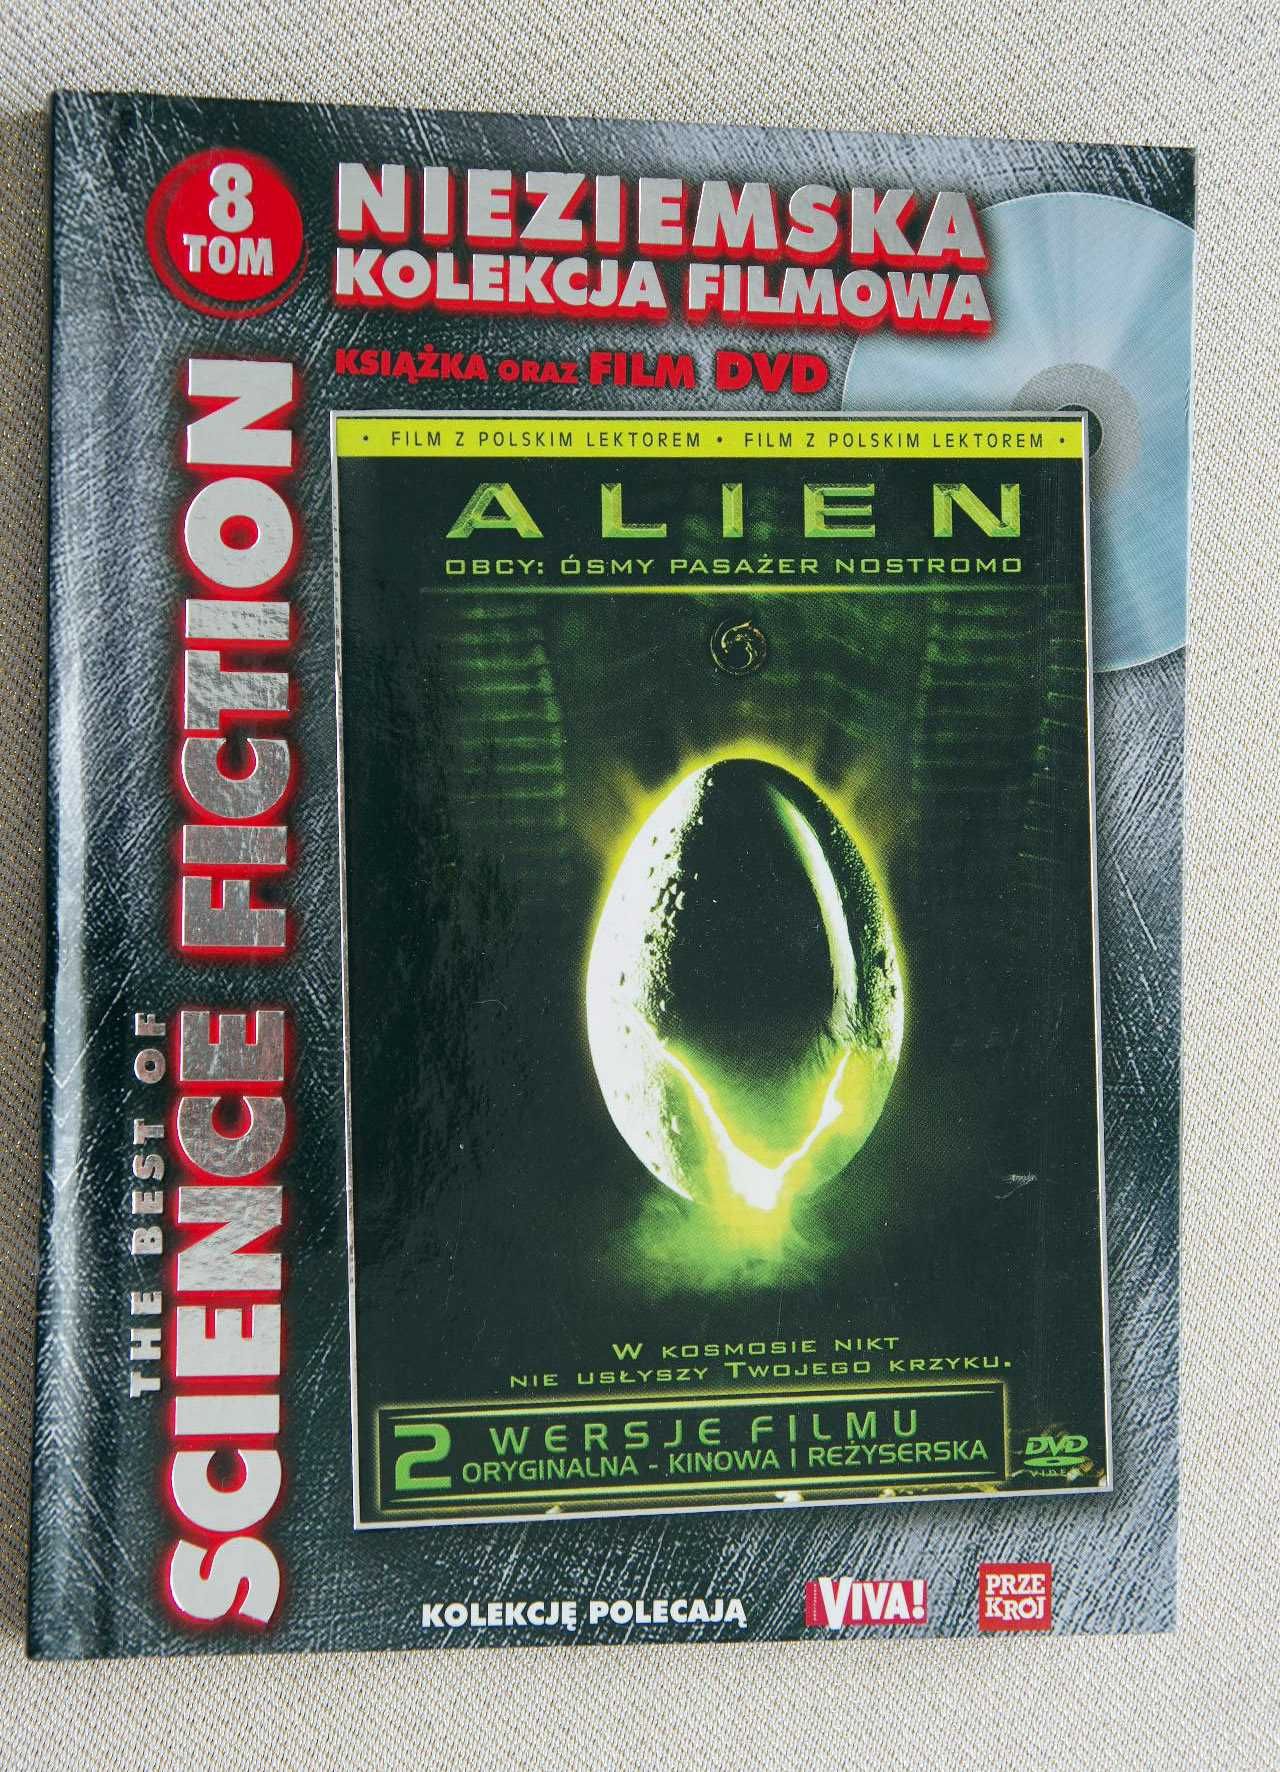 ALIEN film DVD 8 TOM Science Fiction